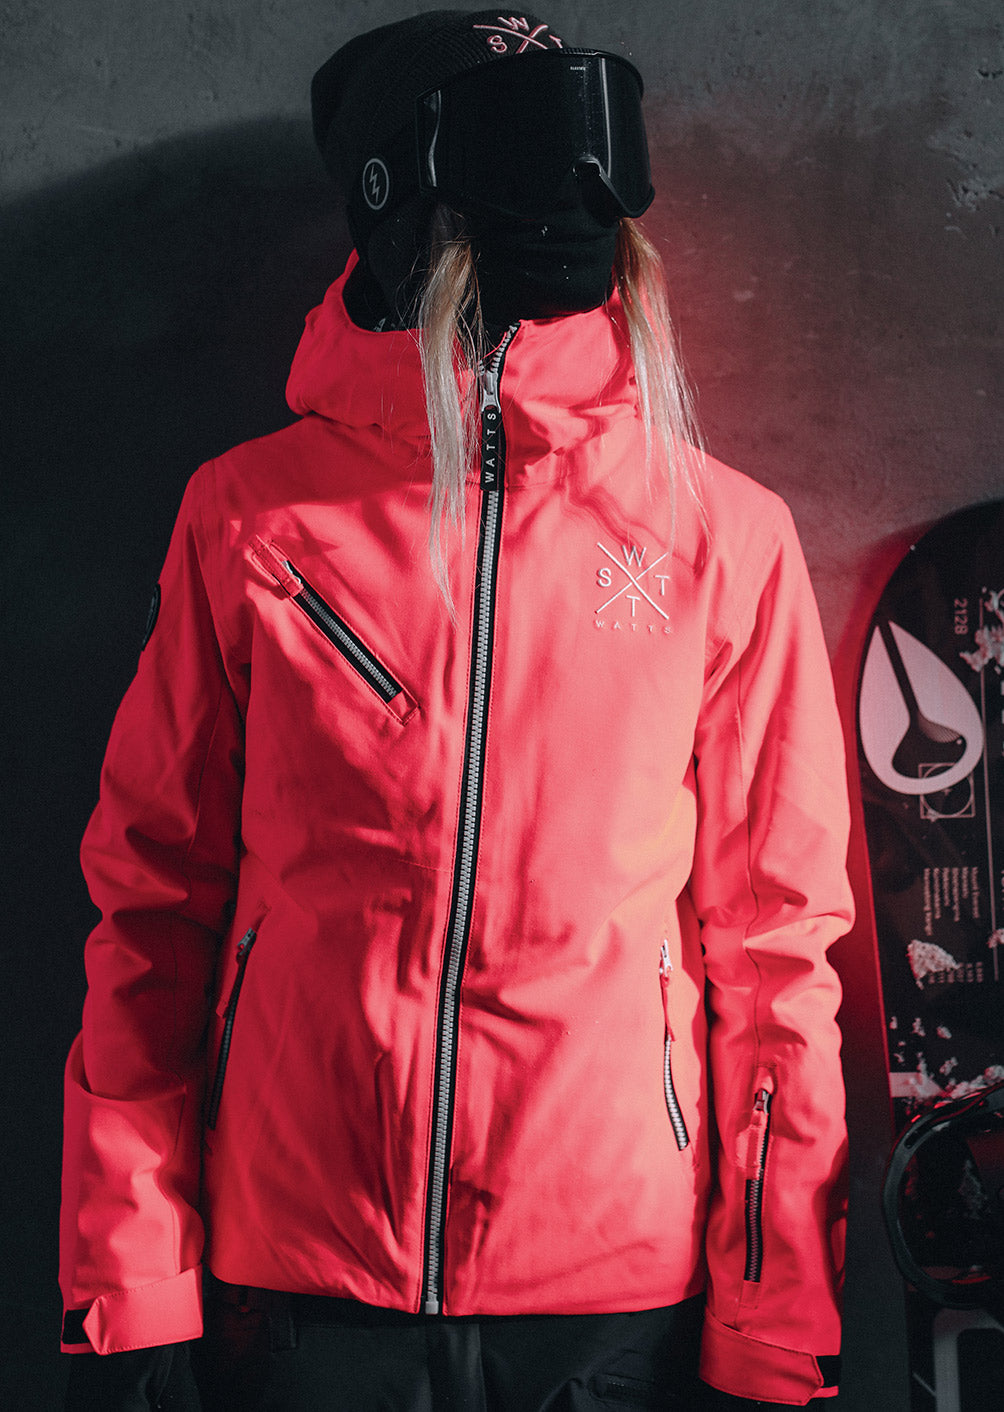 manteau ski rose femme